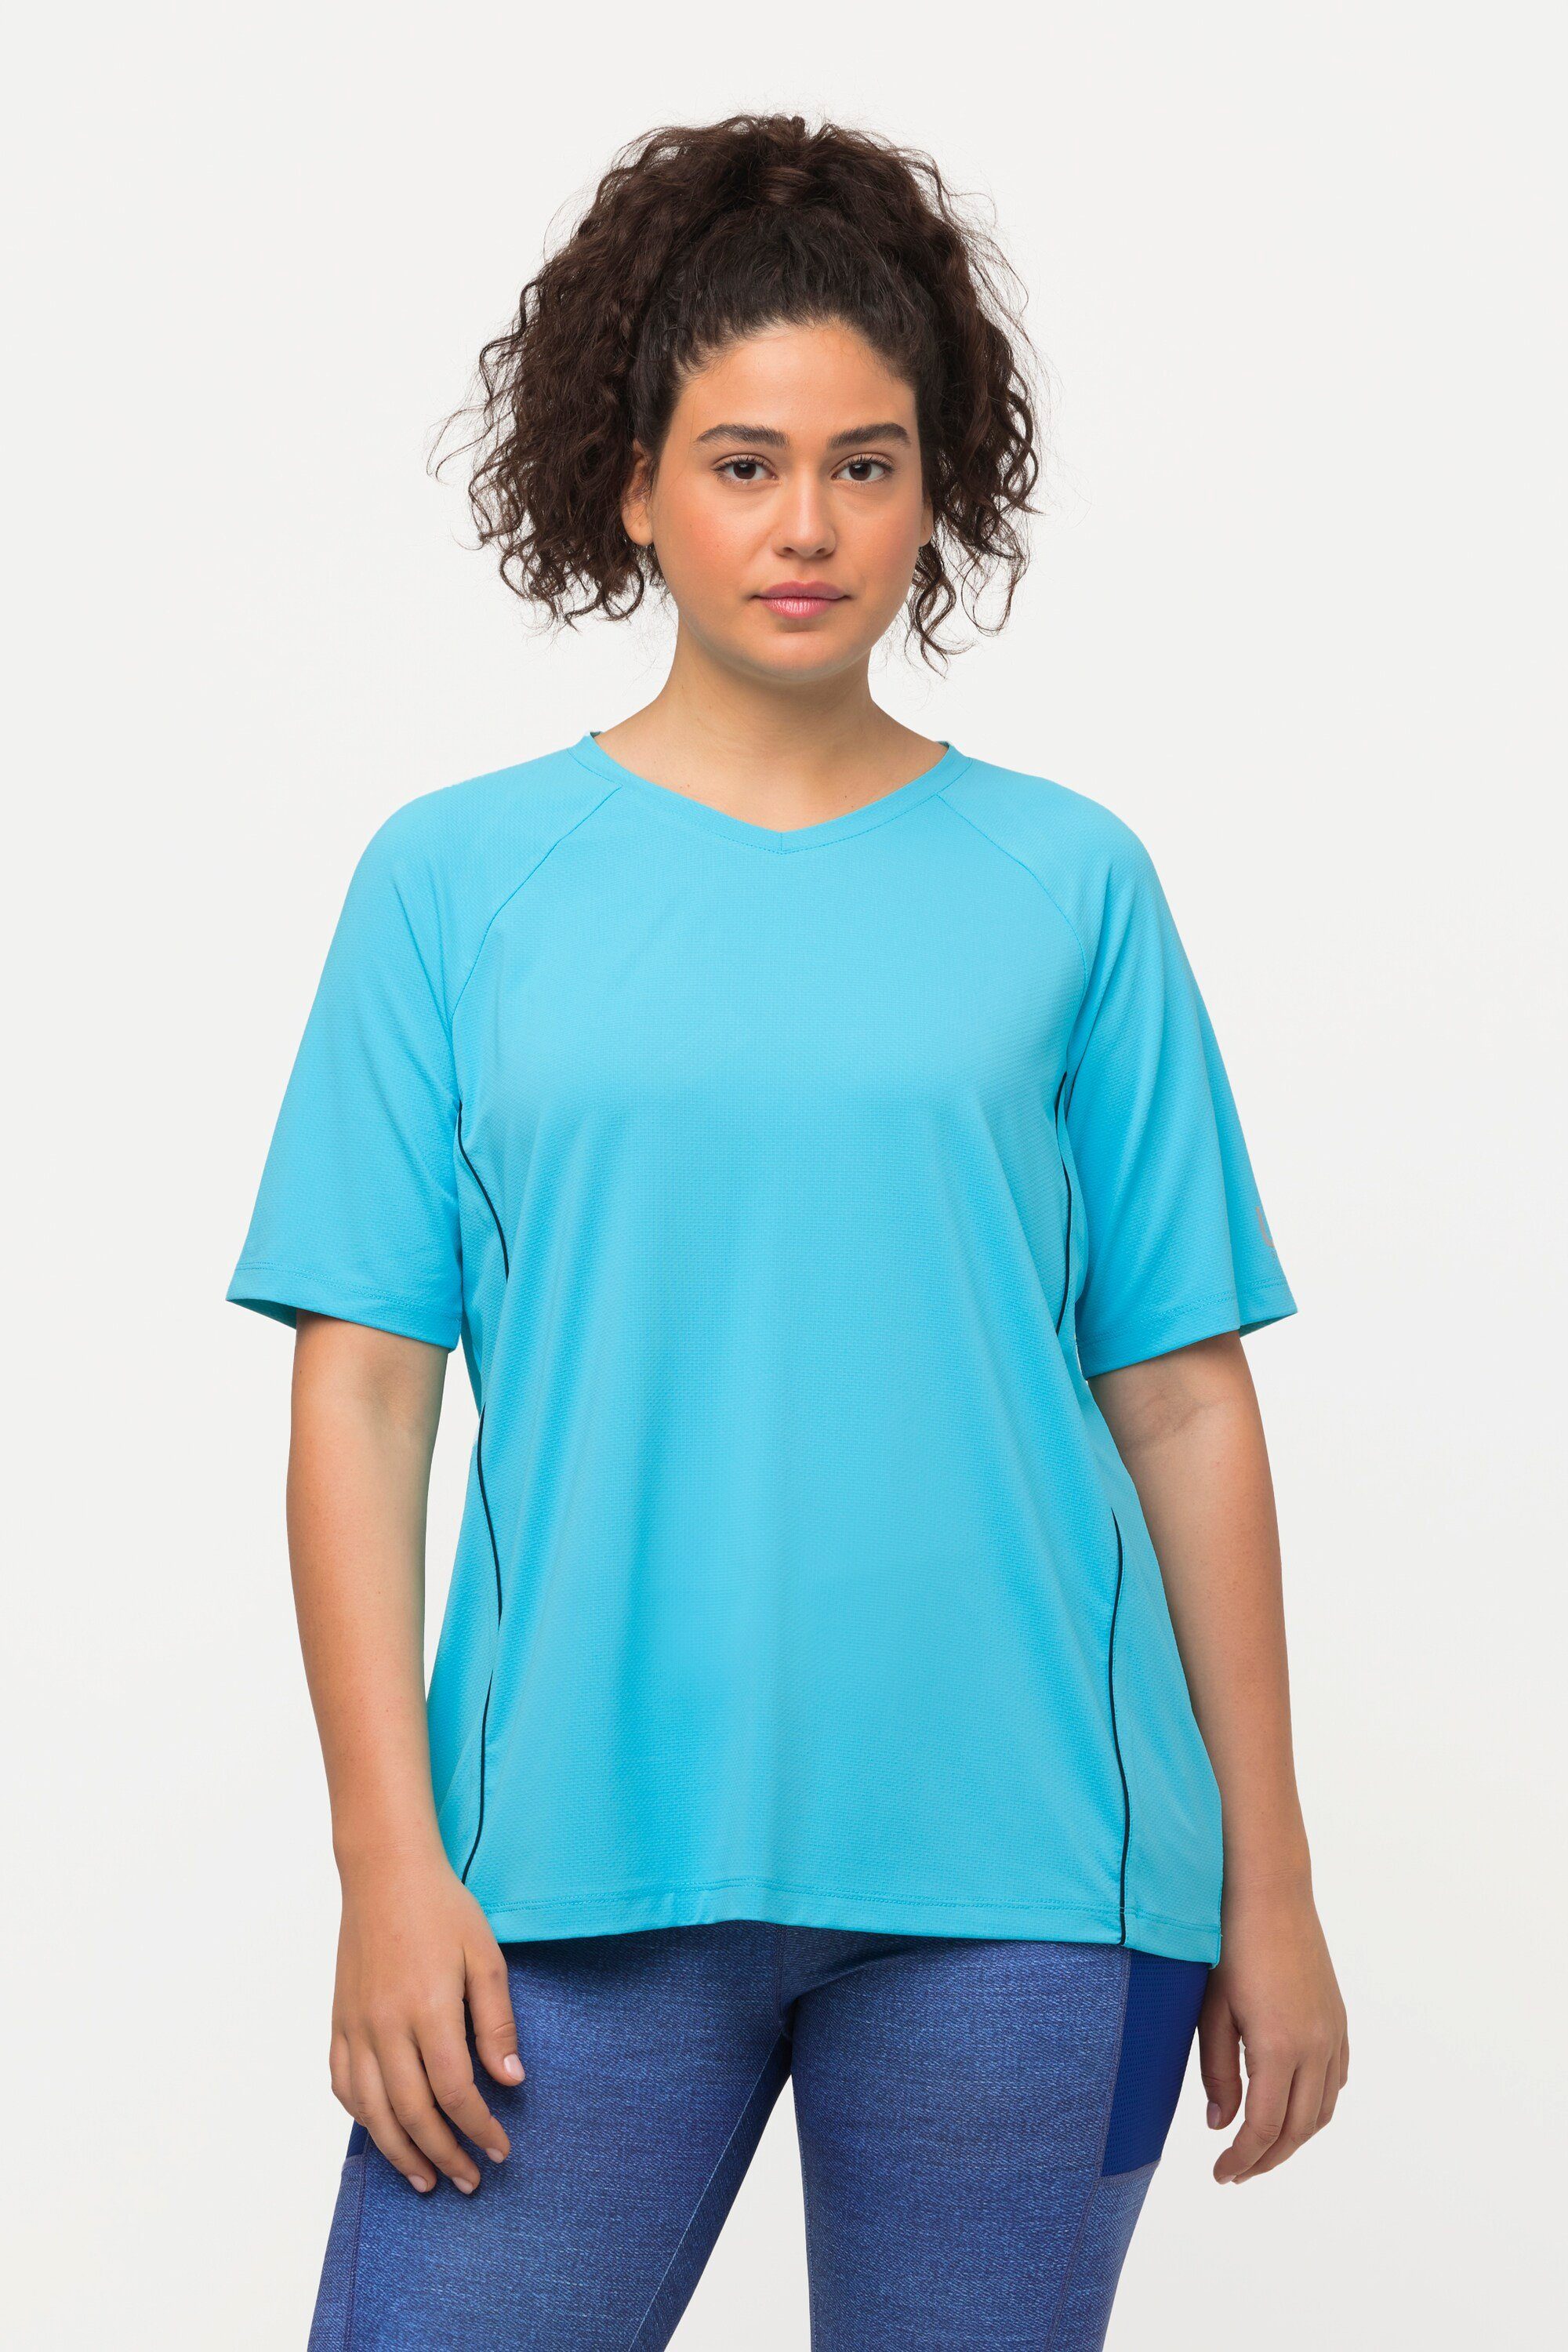 Halbarm türkis Popken V-Ausschnitt T-Shirt Ulla 50+ UV-Schutz Rundhalsshirt helles